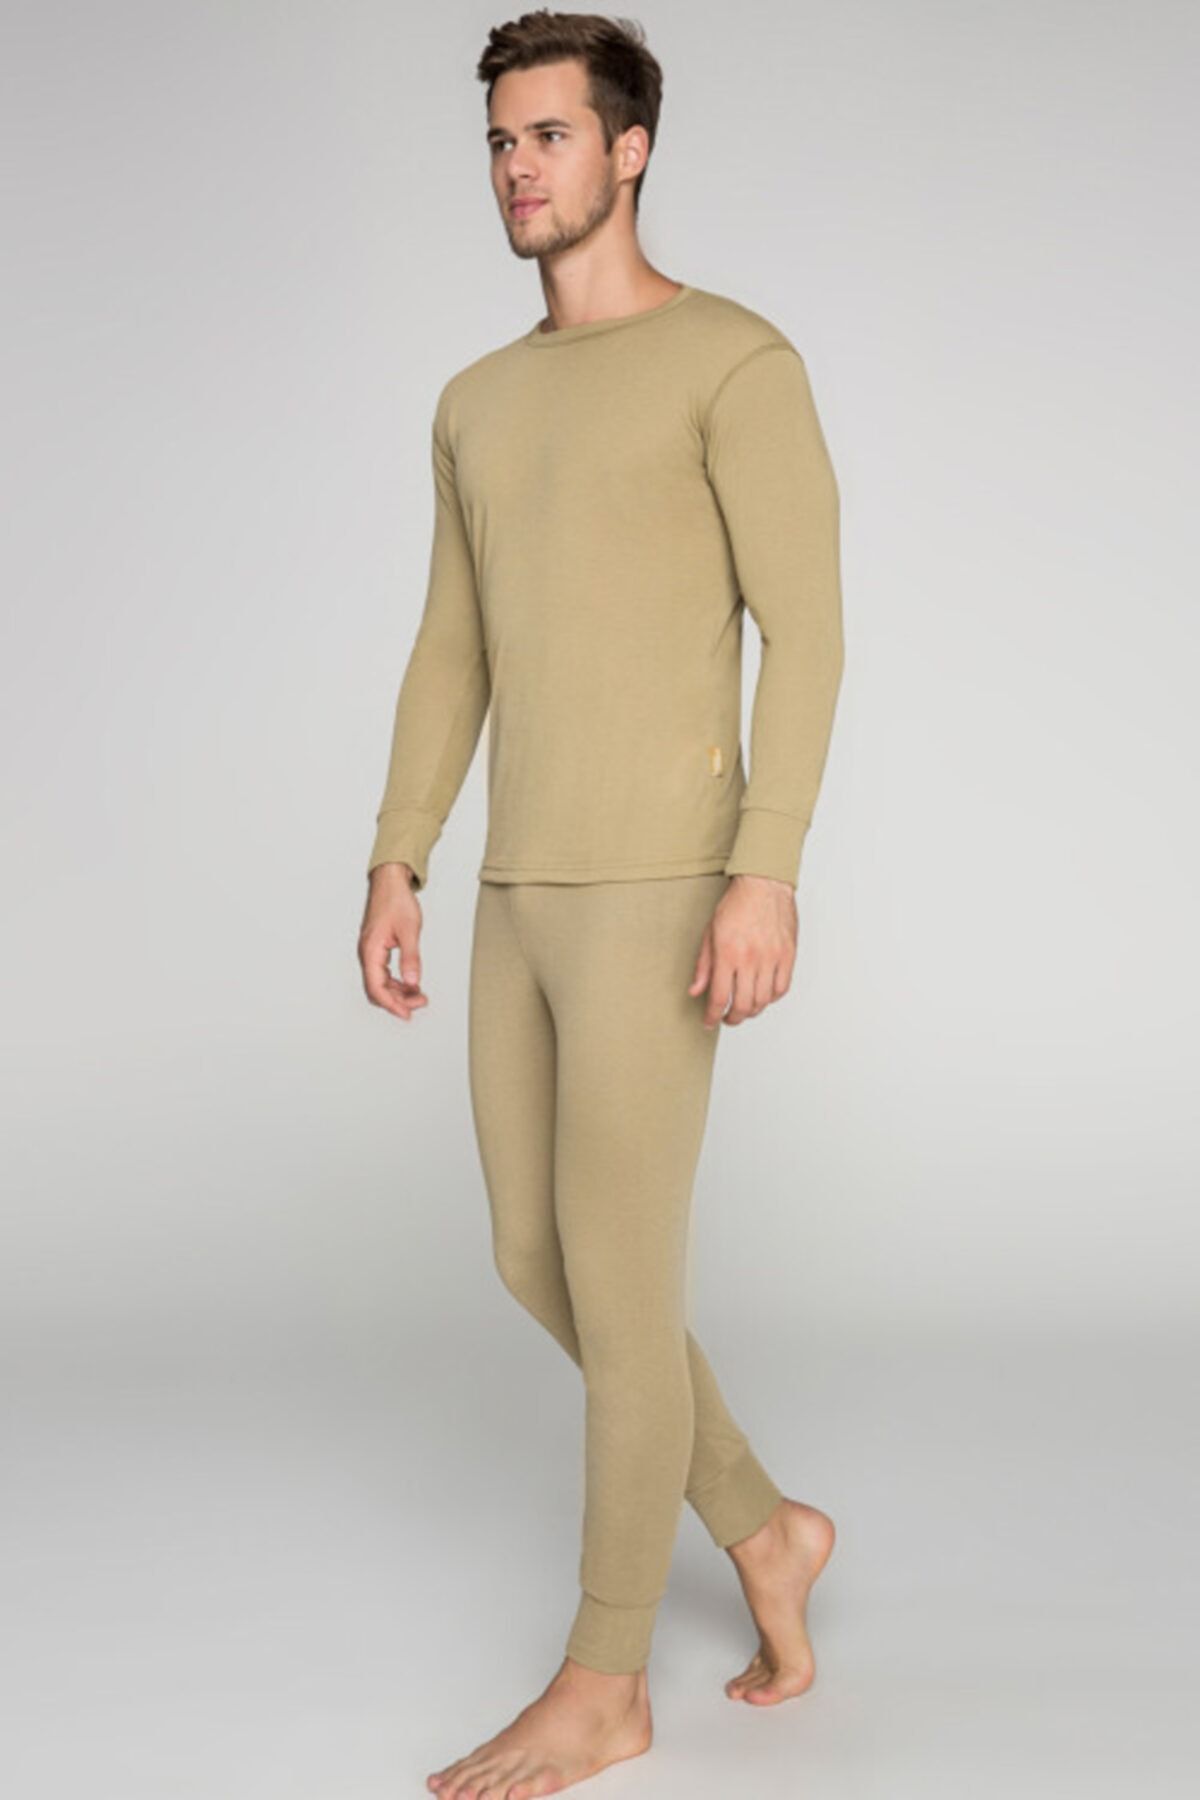 DERTEX Men's Khaki Thermal 30 Degree Wool Military Underwear Suit